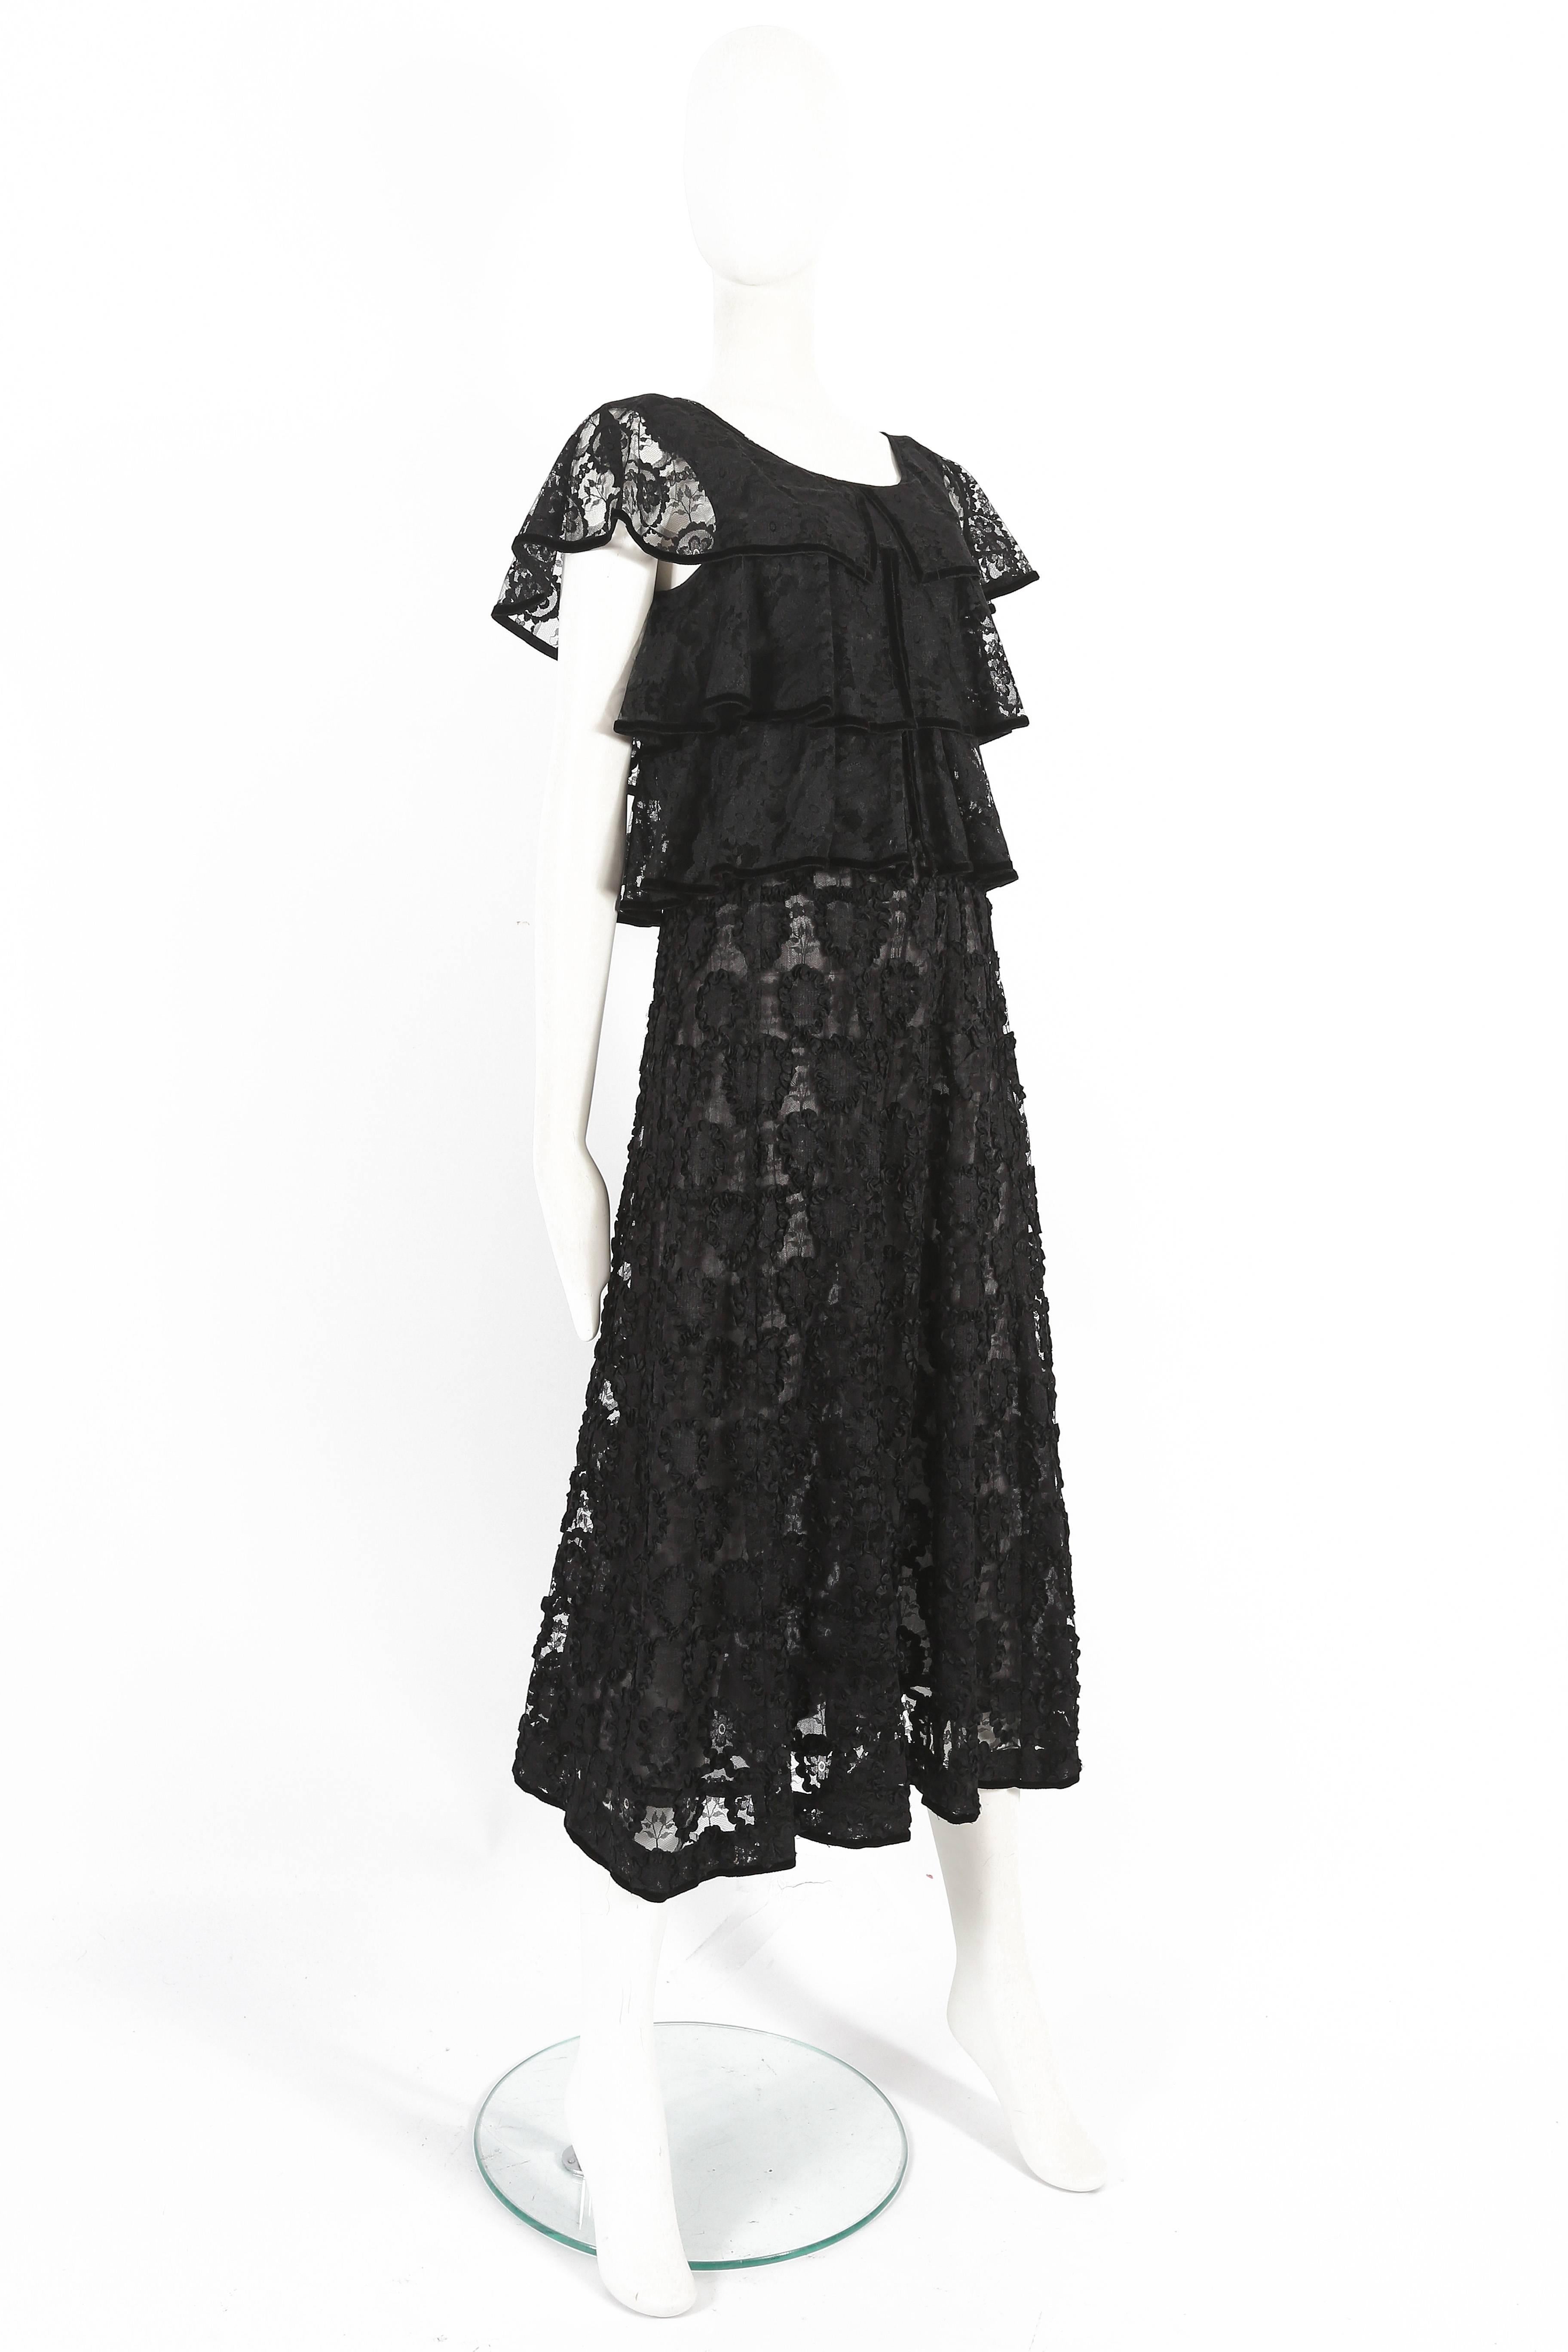 Black Thea Porter velvet trimmed lace evening dress, circa late 1960s